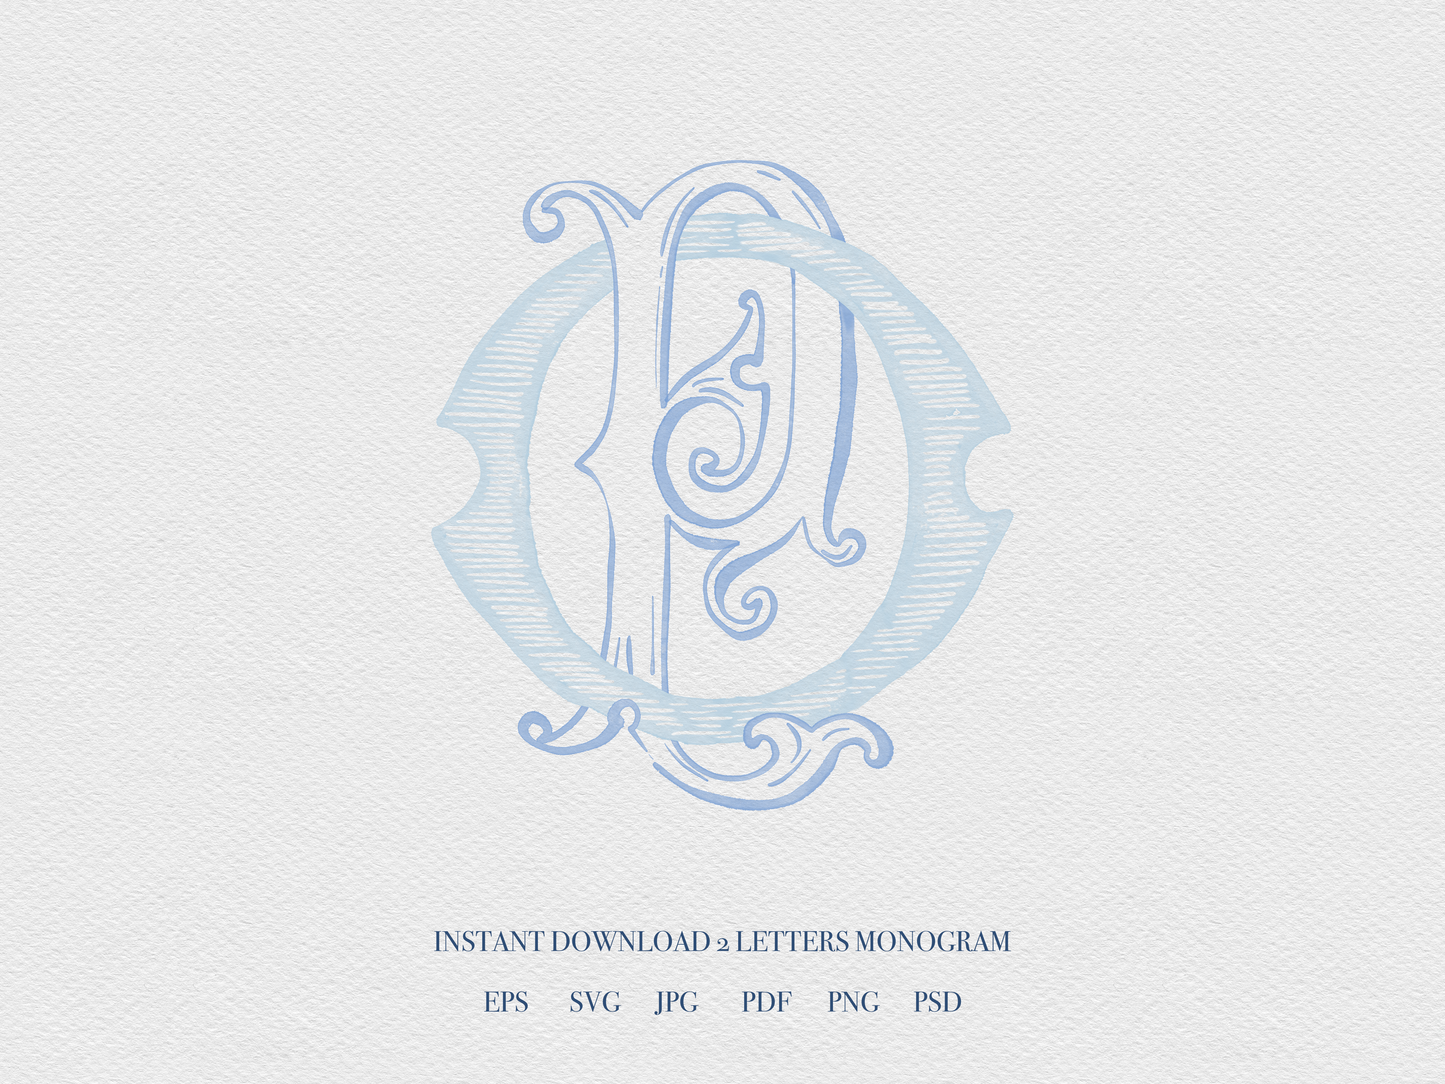 2 Letter Monogram with Letters OP PO | Digital Download - Wedding Monogram SVG, Personal Logo, Wedding Logo for Wedding Invitations The Wedding Crest Lab